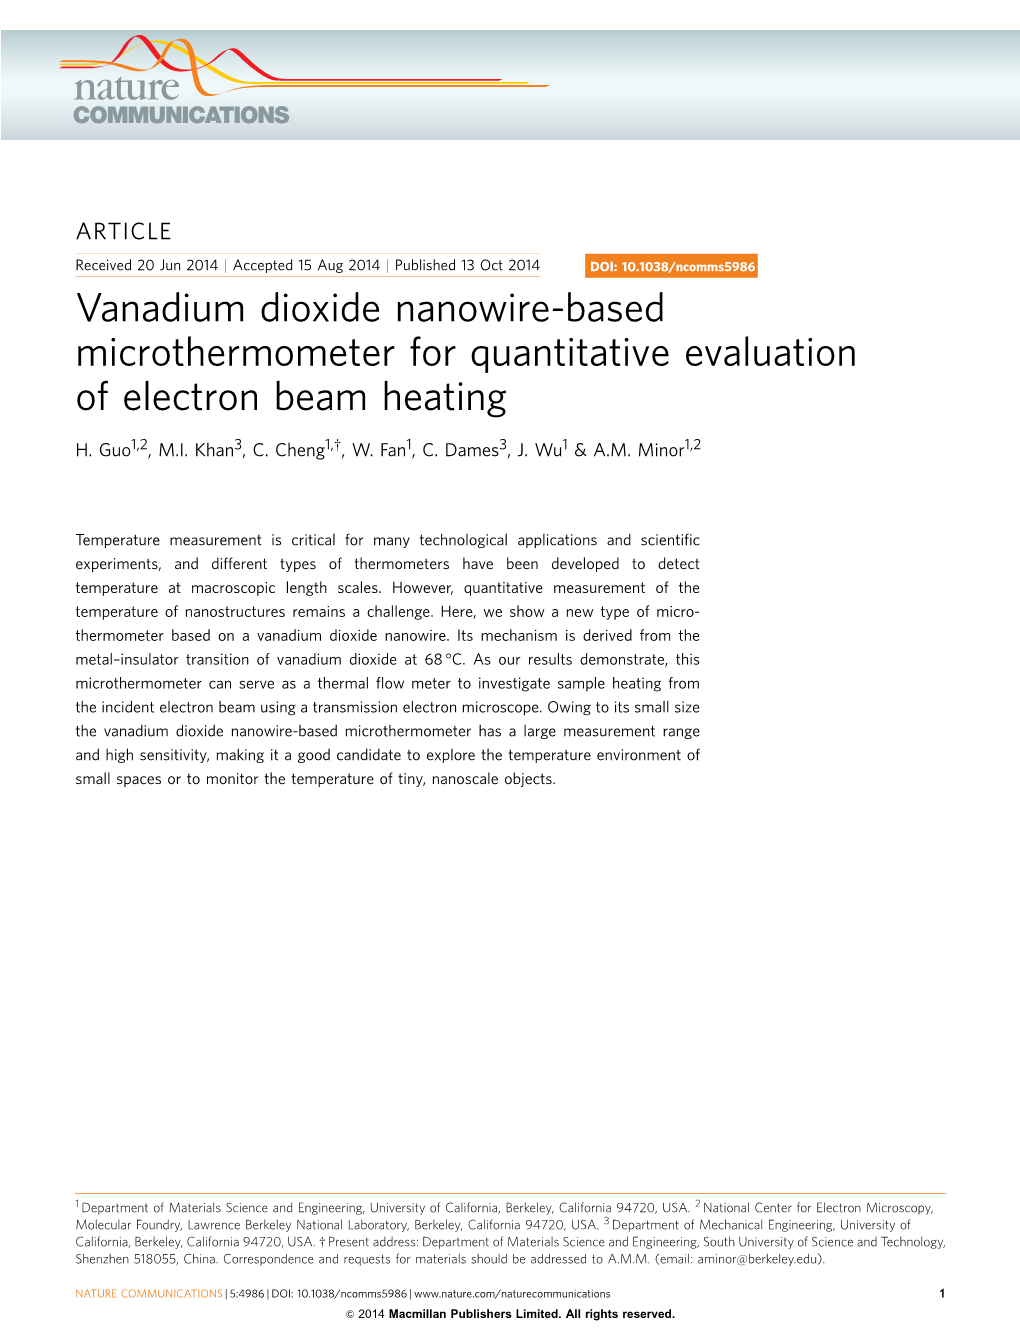 Vanadium Dioxide Nanowire-Based Microthermometer for Quantitative Evaluation of Electron Beam Heating